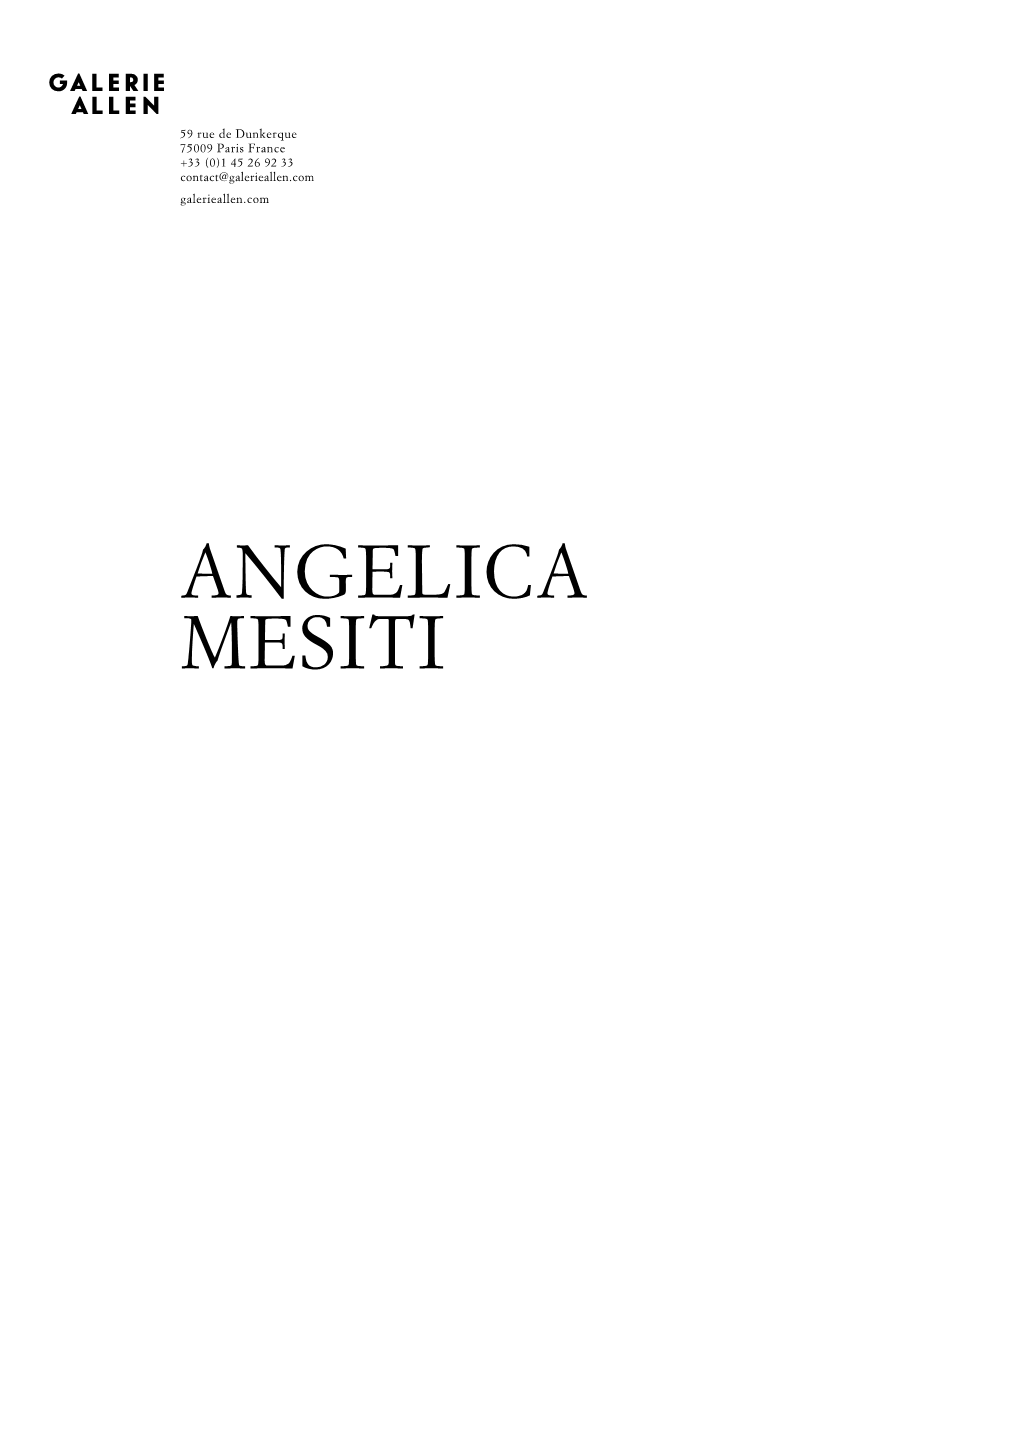 Angelica Mesiti Biography